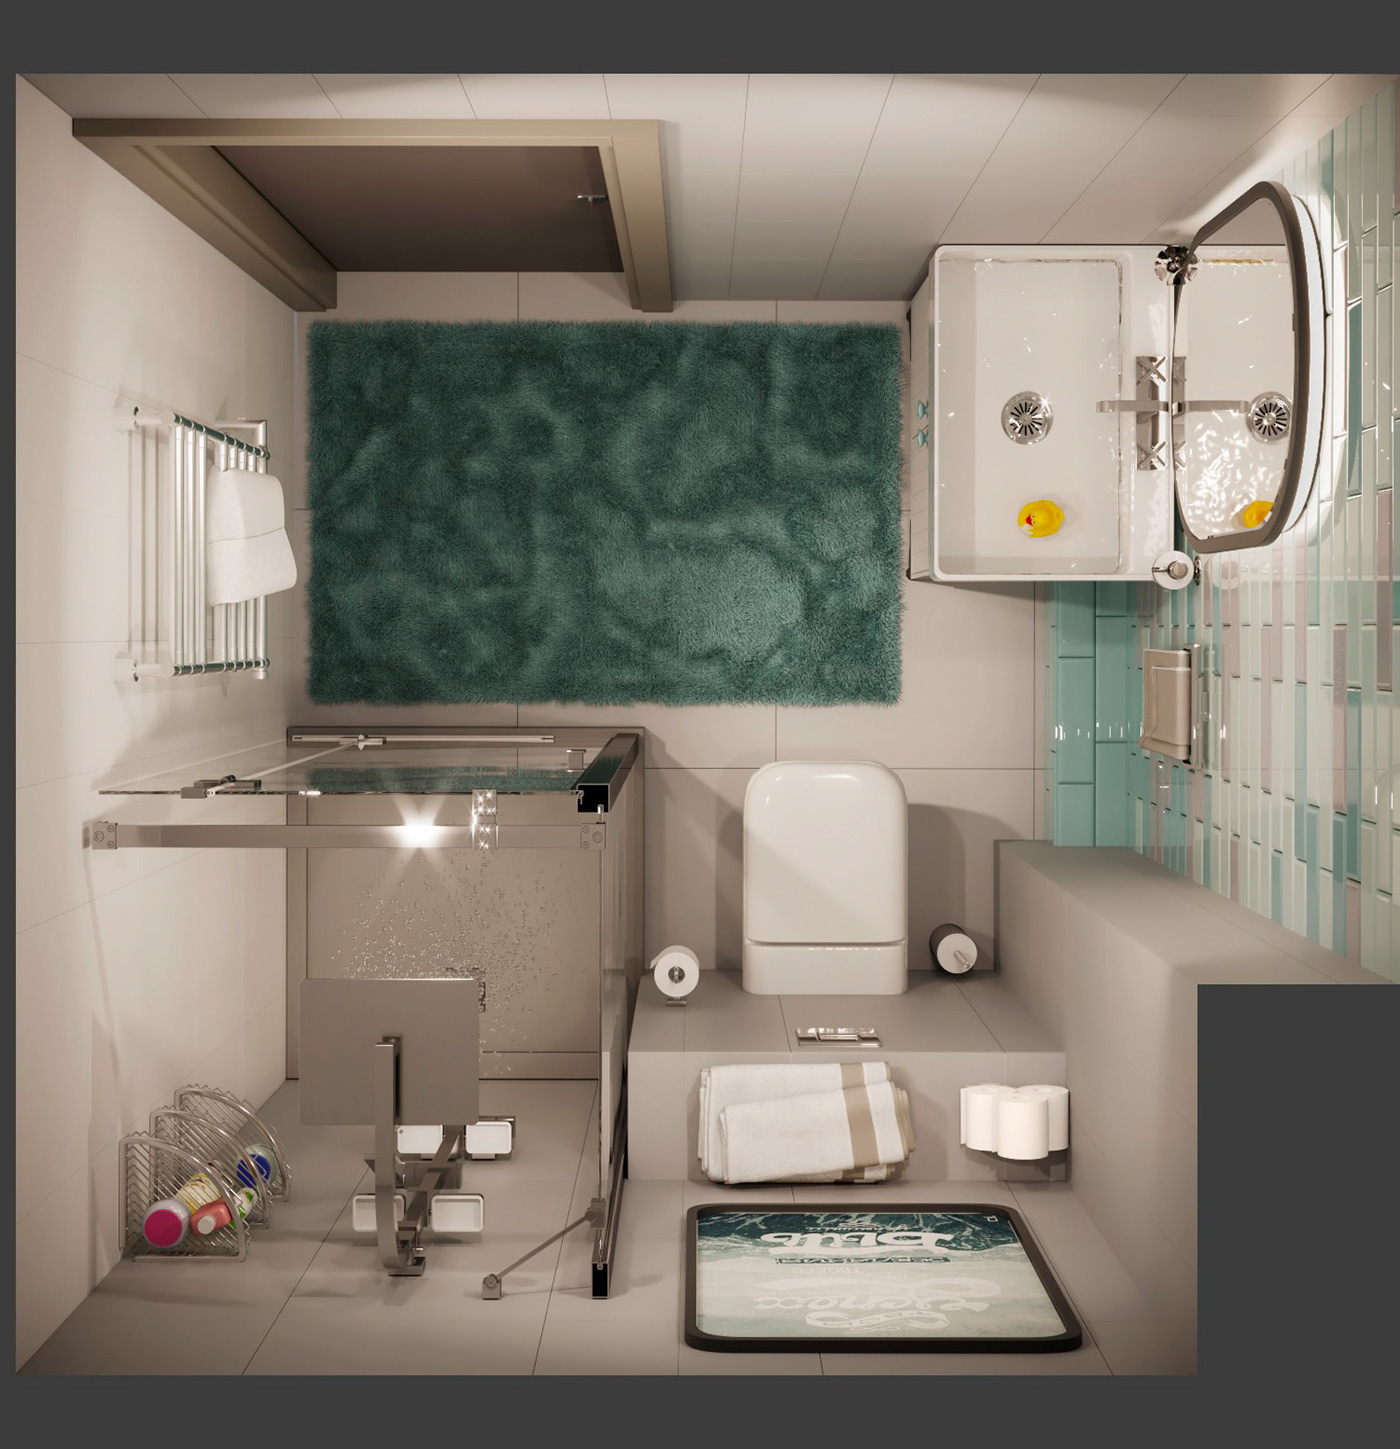 Image may contain: wall, bathroom and interior